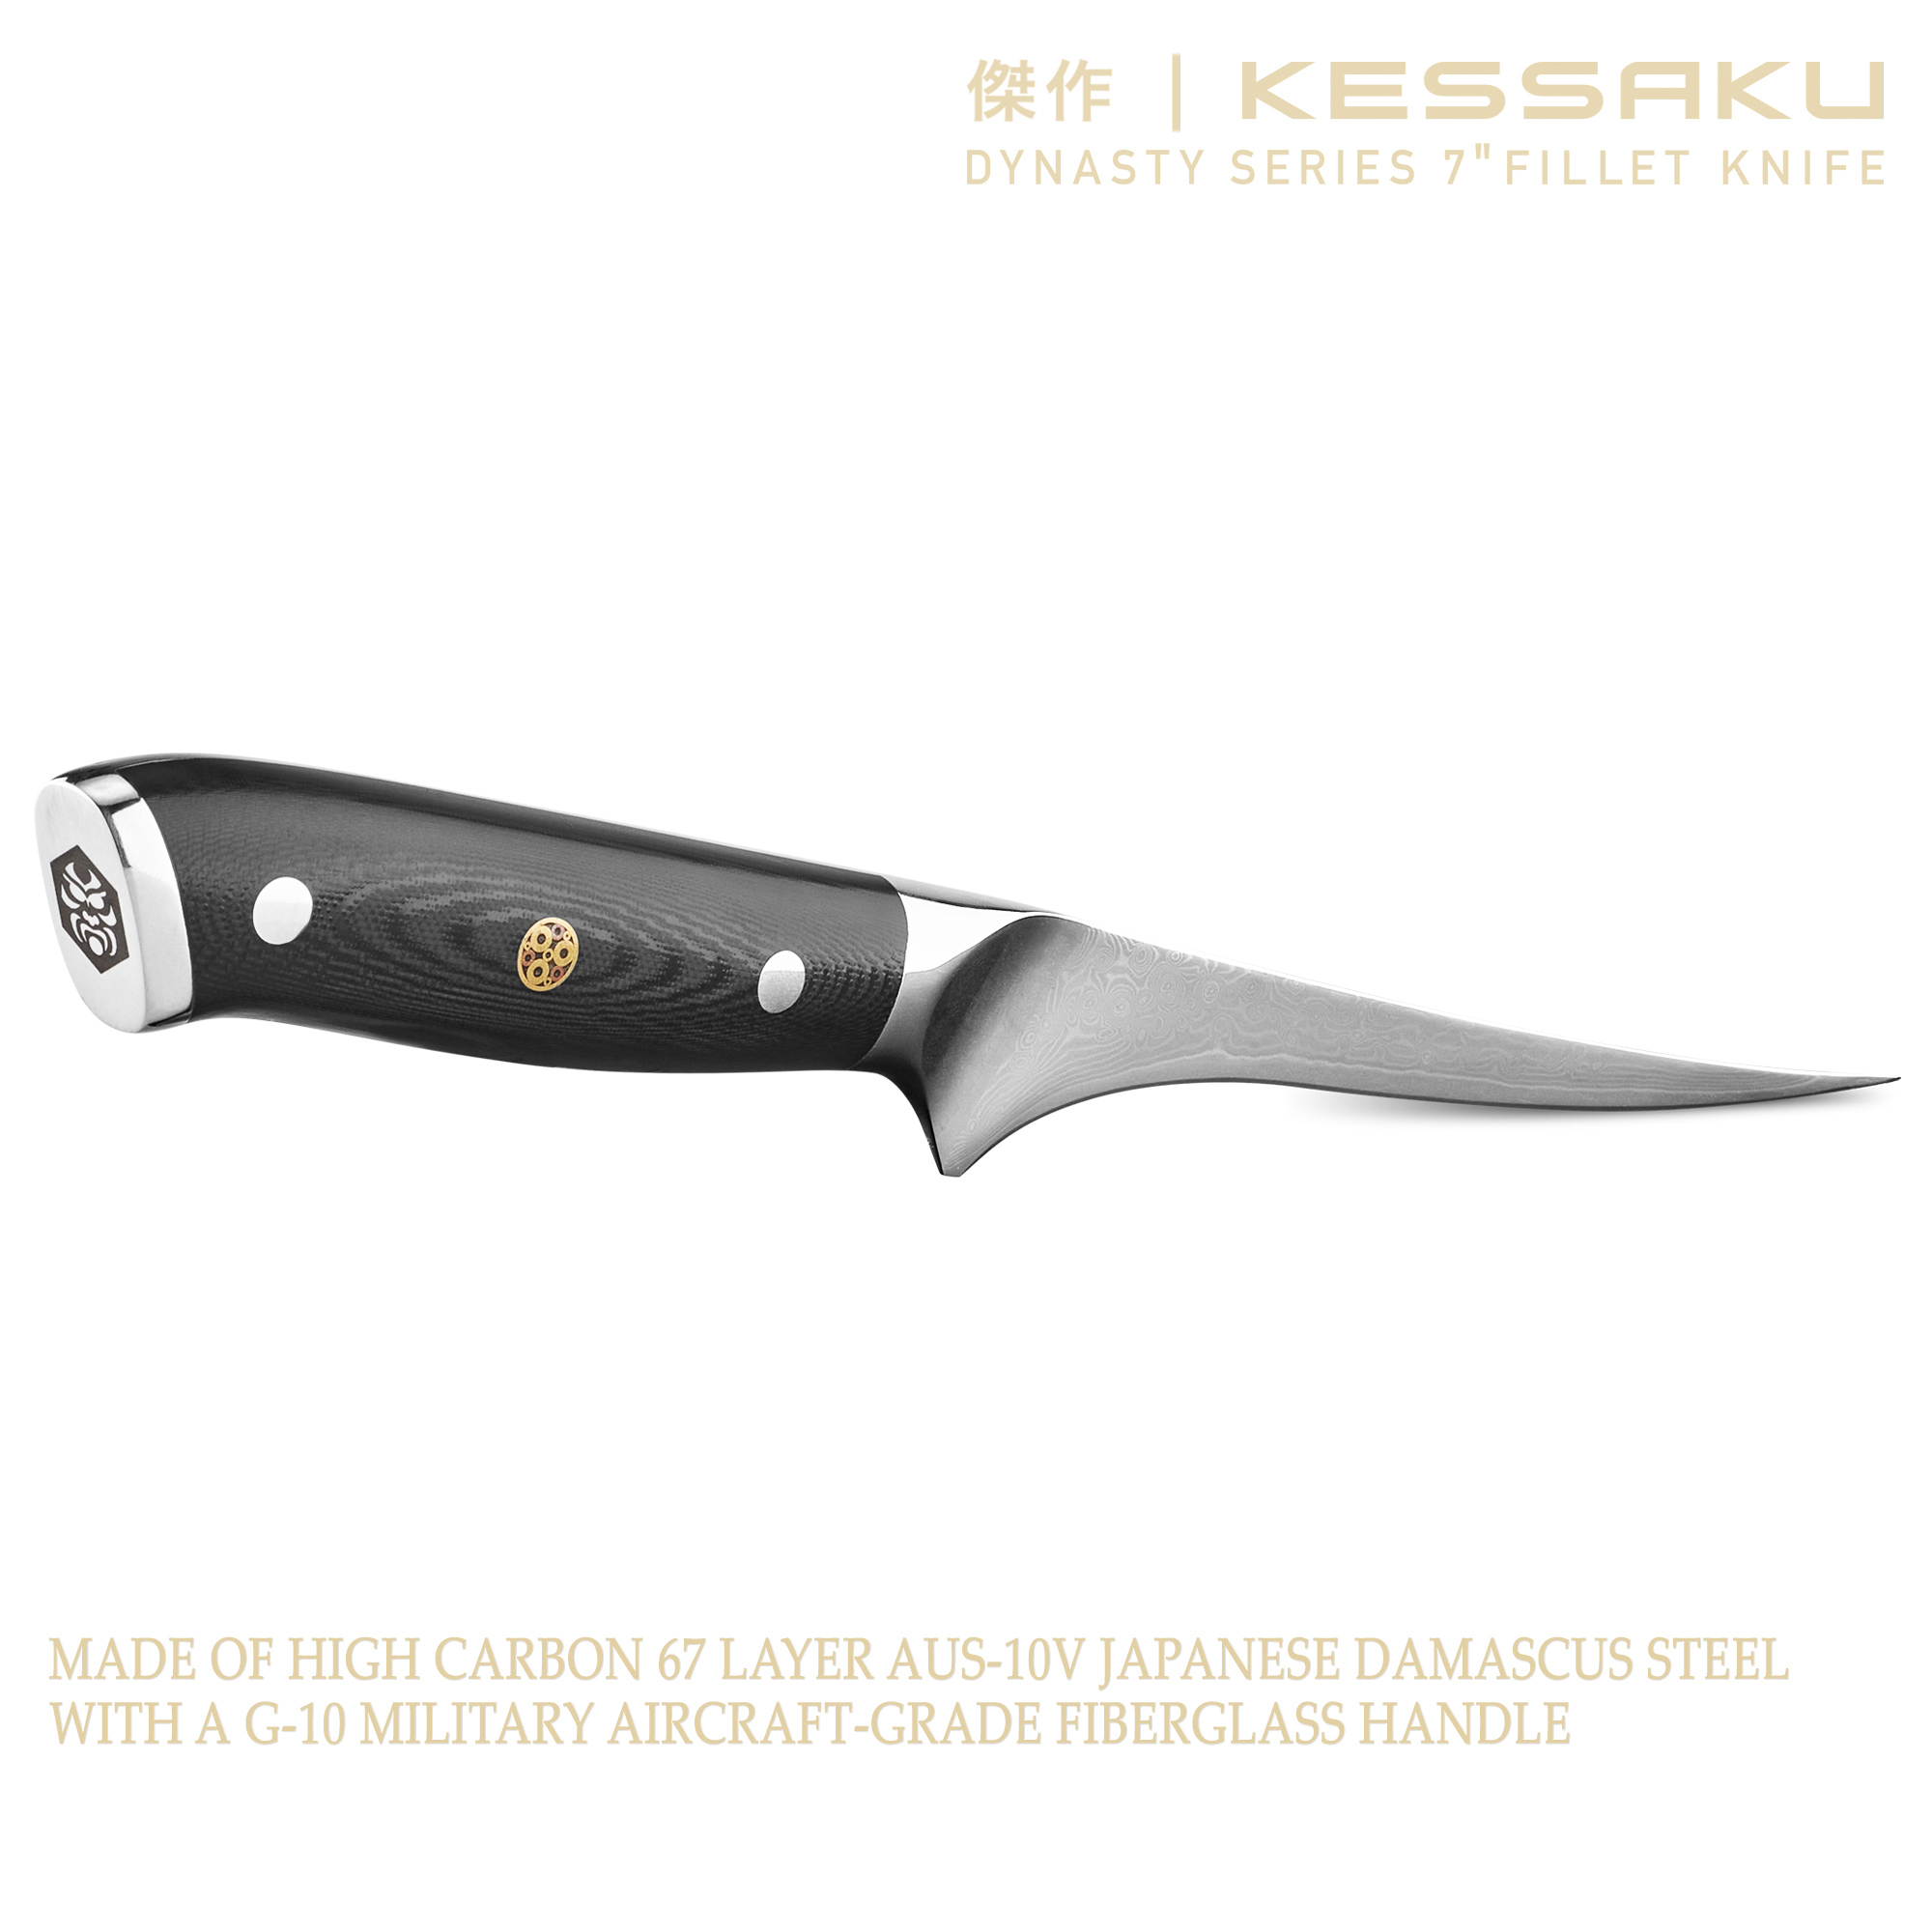 Kessaku Fillet Knife and Leather Sheath with Belt Loop - 7 inch - Damascus Dynasty Series - AUS-10V Steel - G10 Garolite Handle